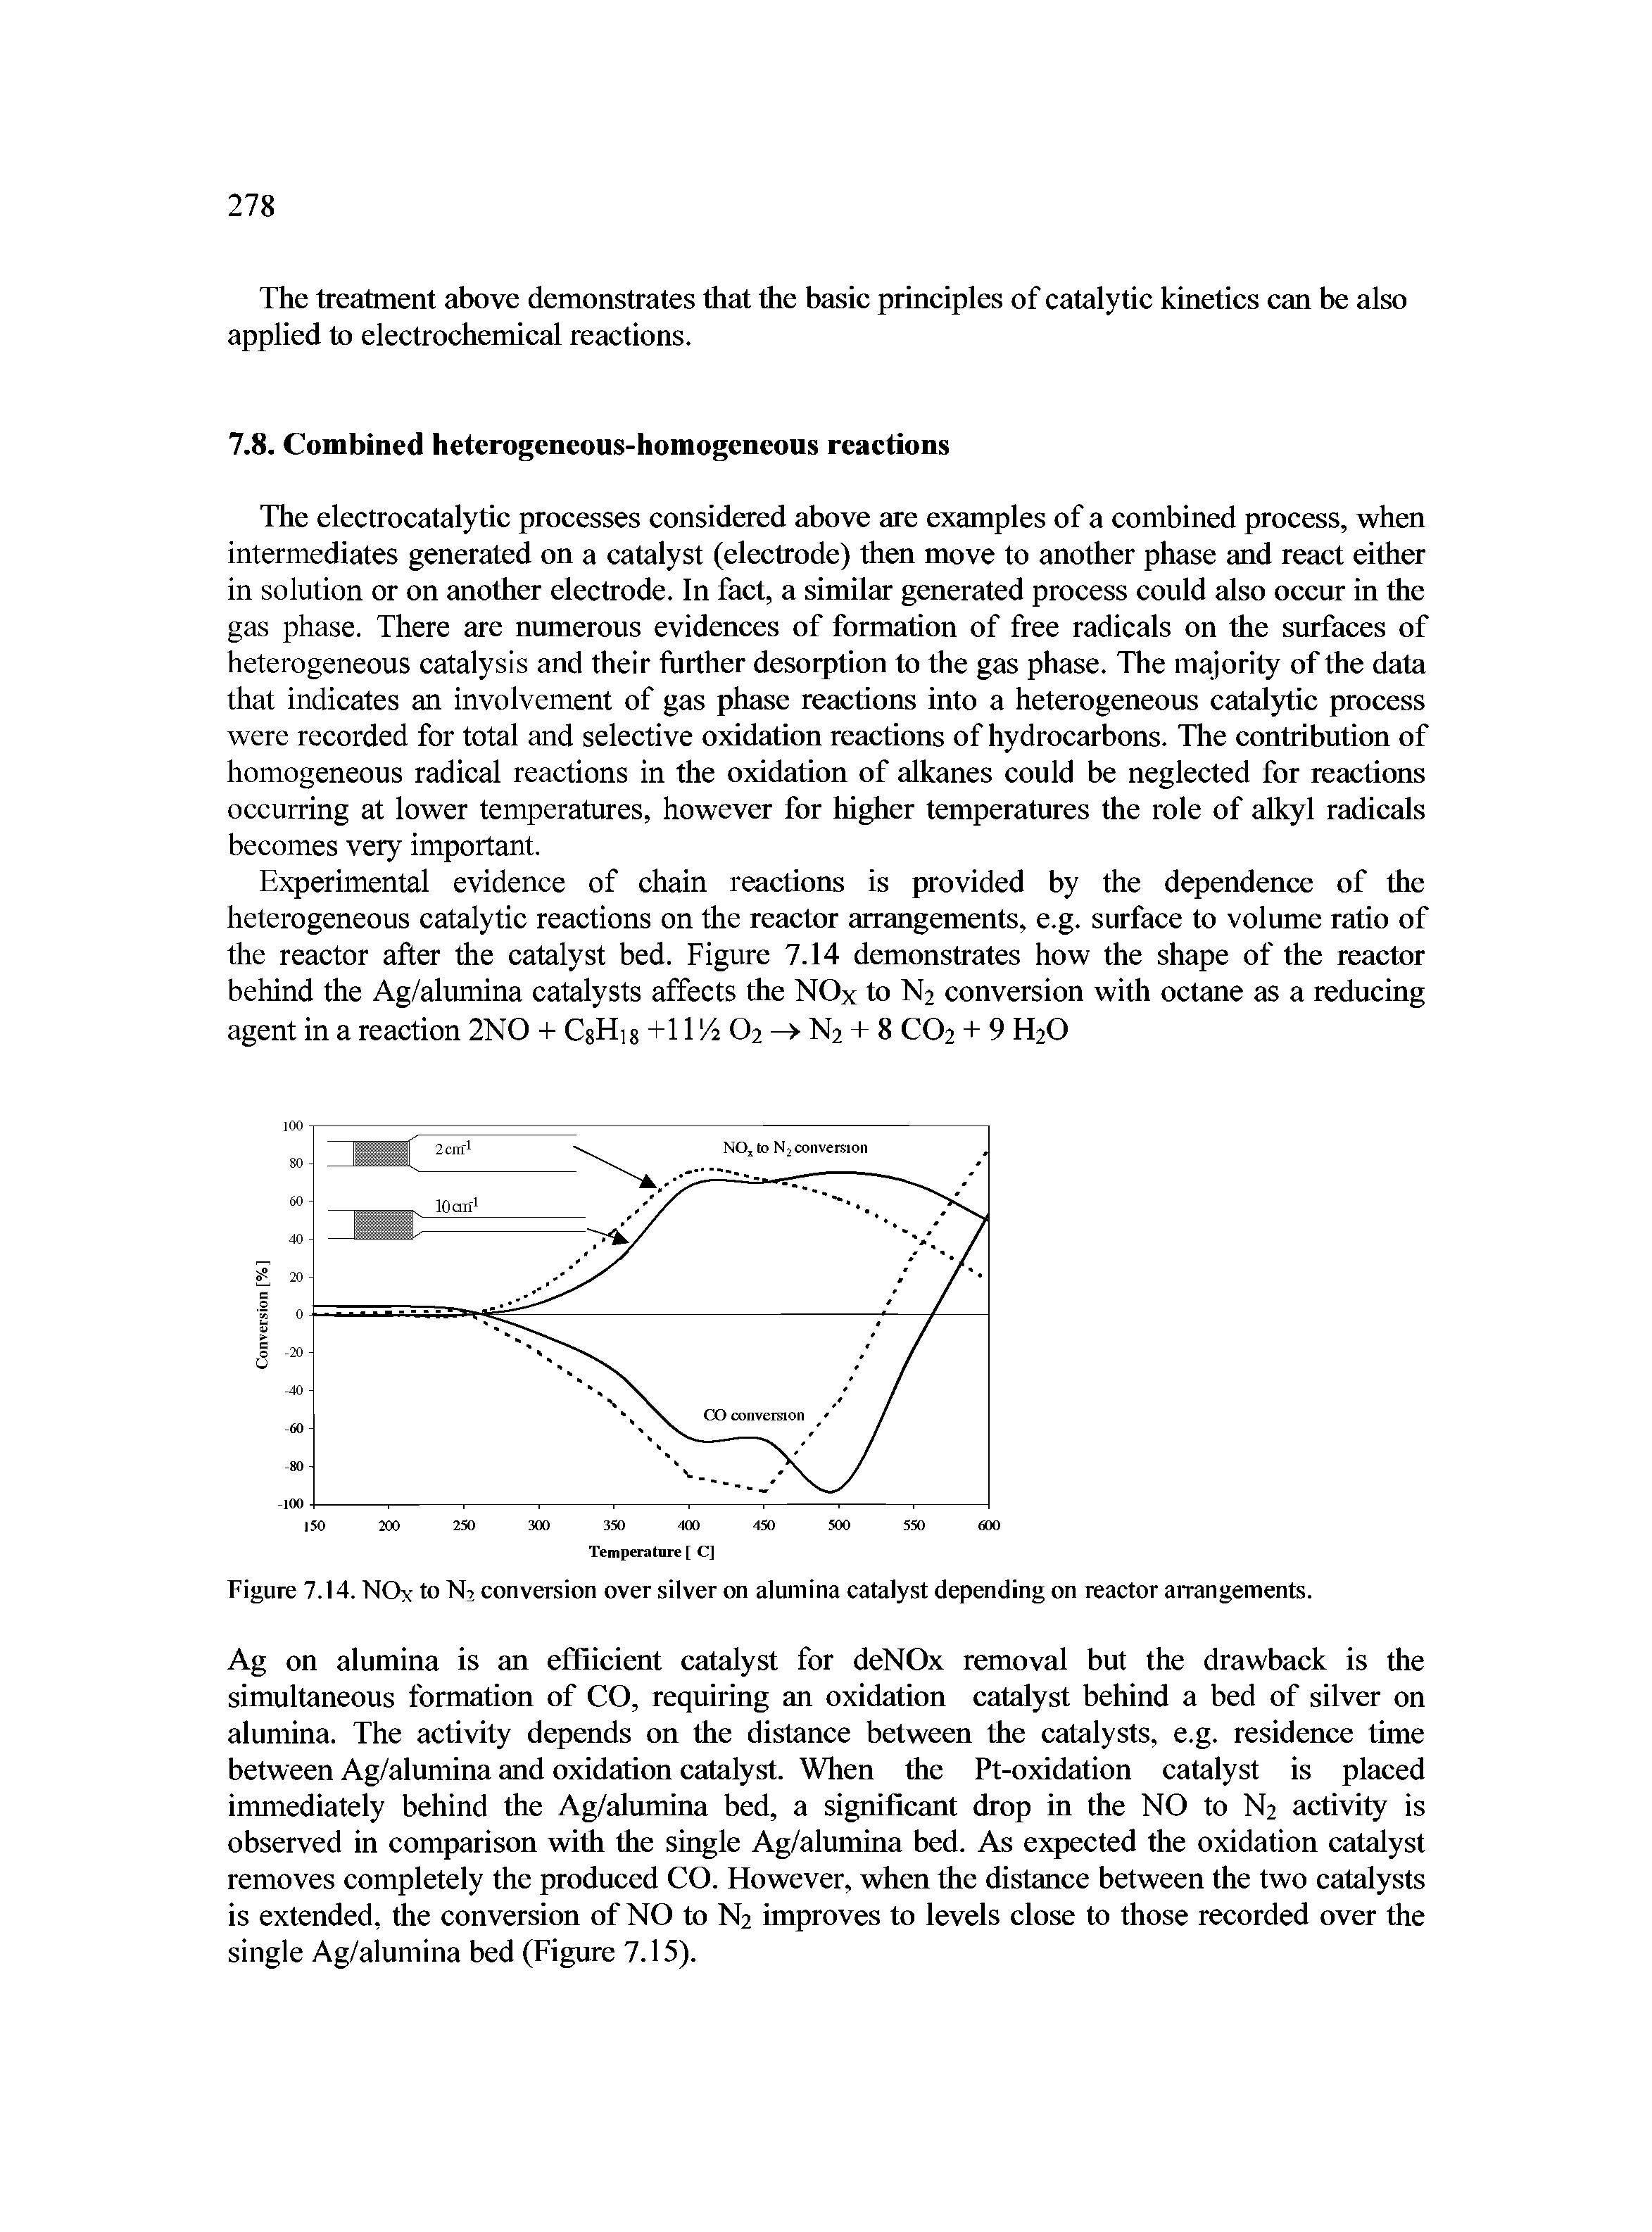 Figure 7.14. NOx to N2 conversion over silver on alumina catalyst depending on reactor arrangements.